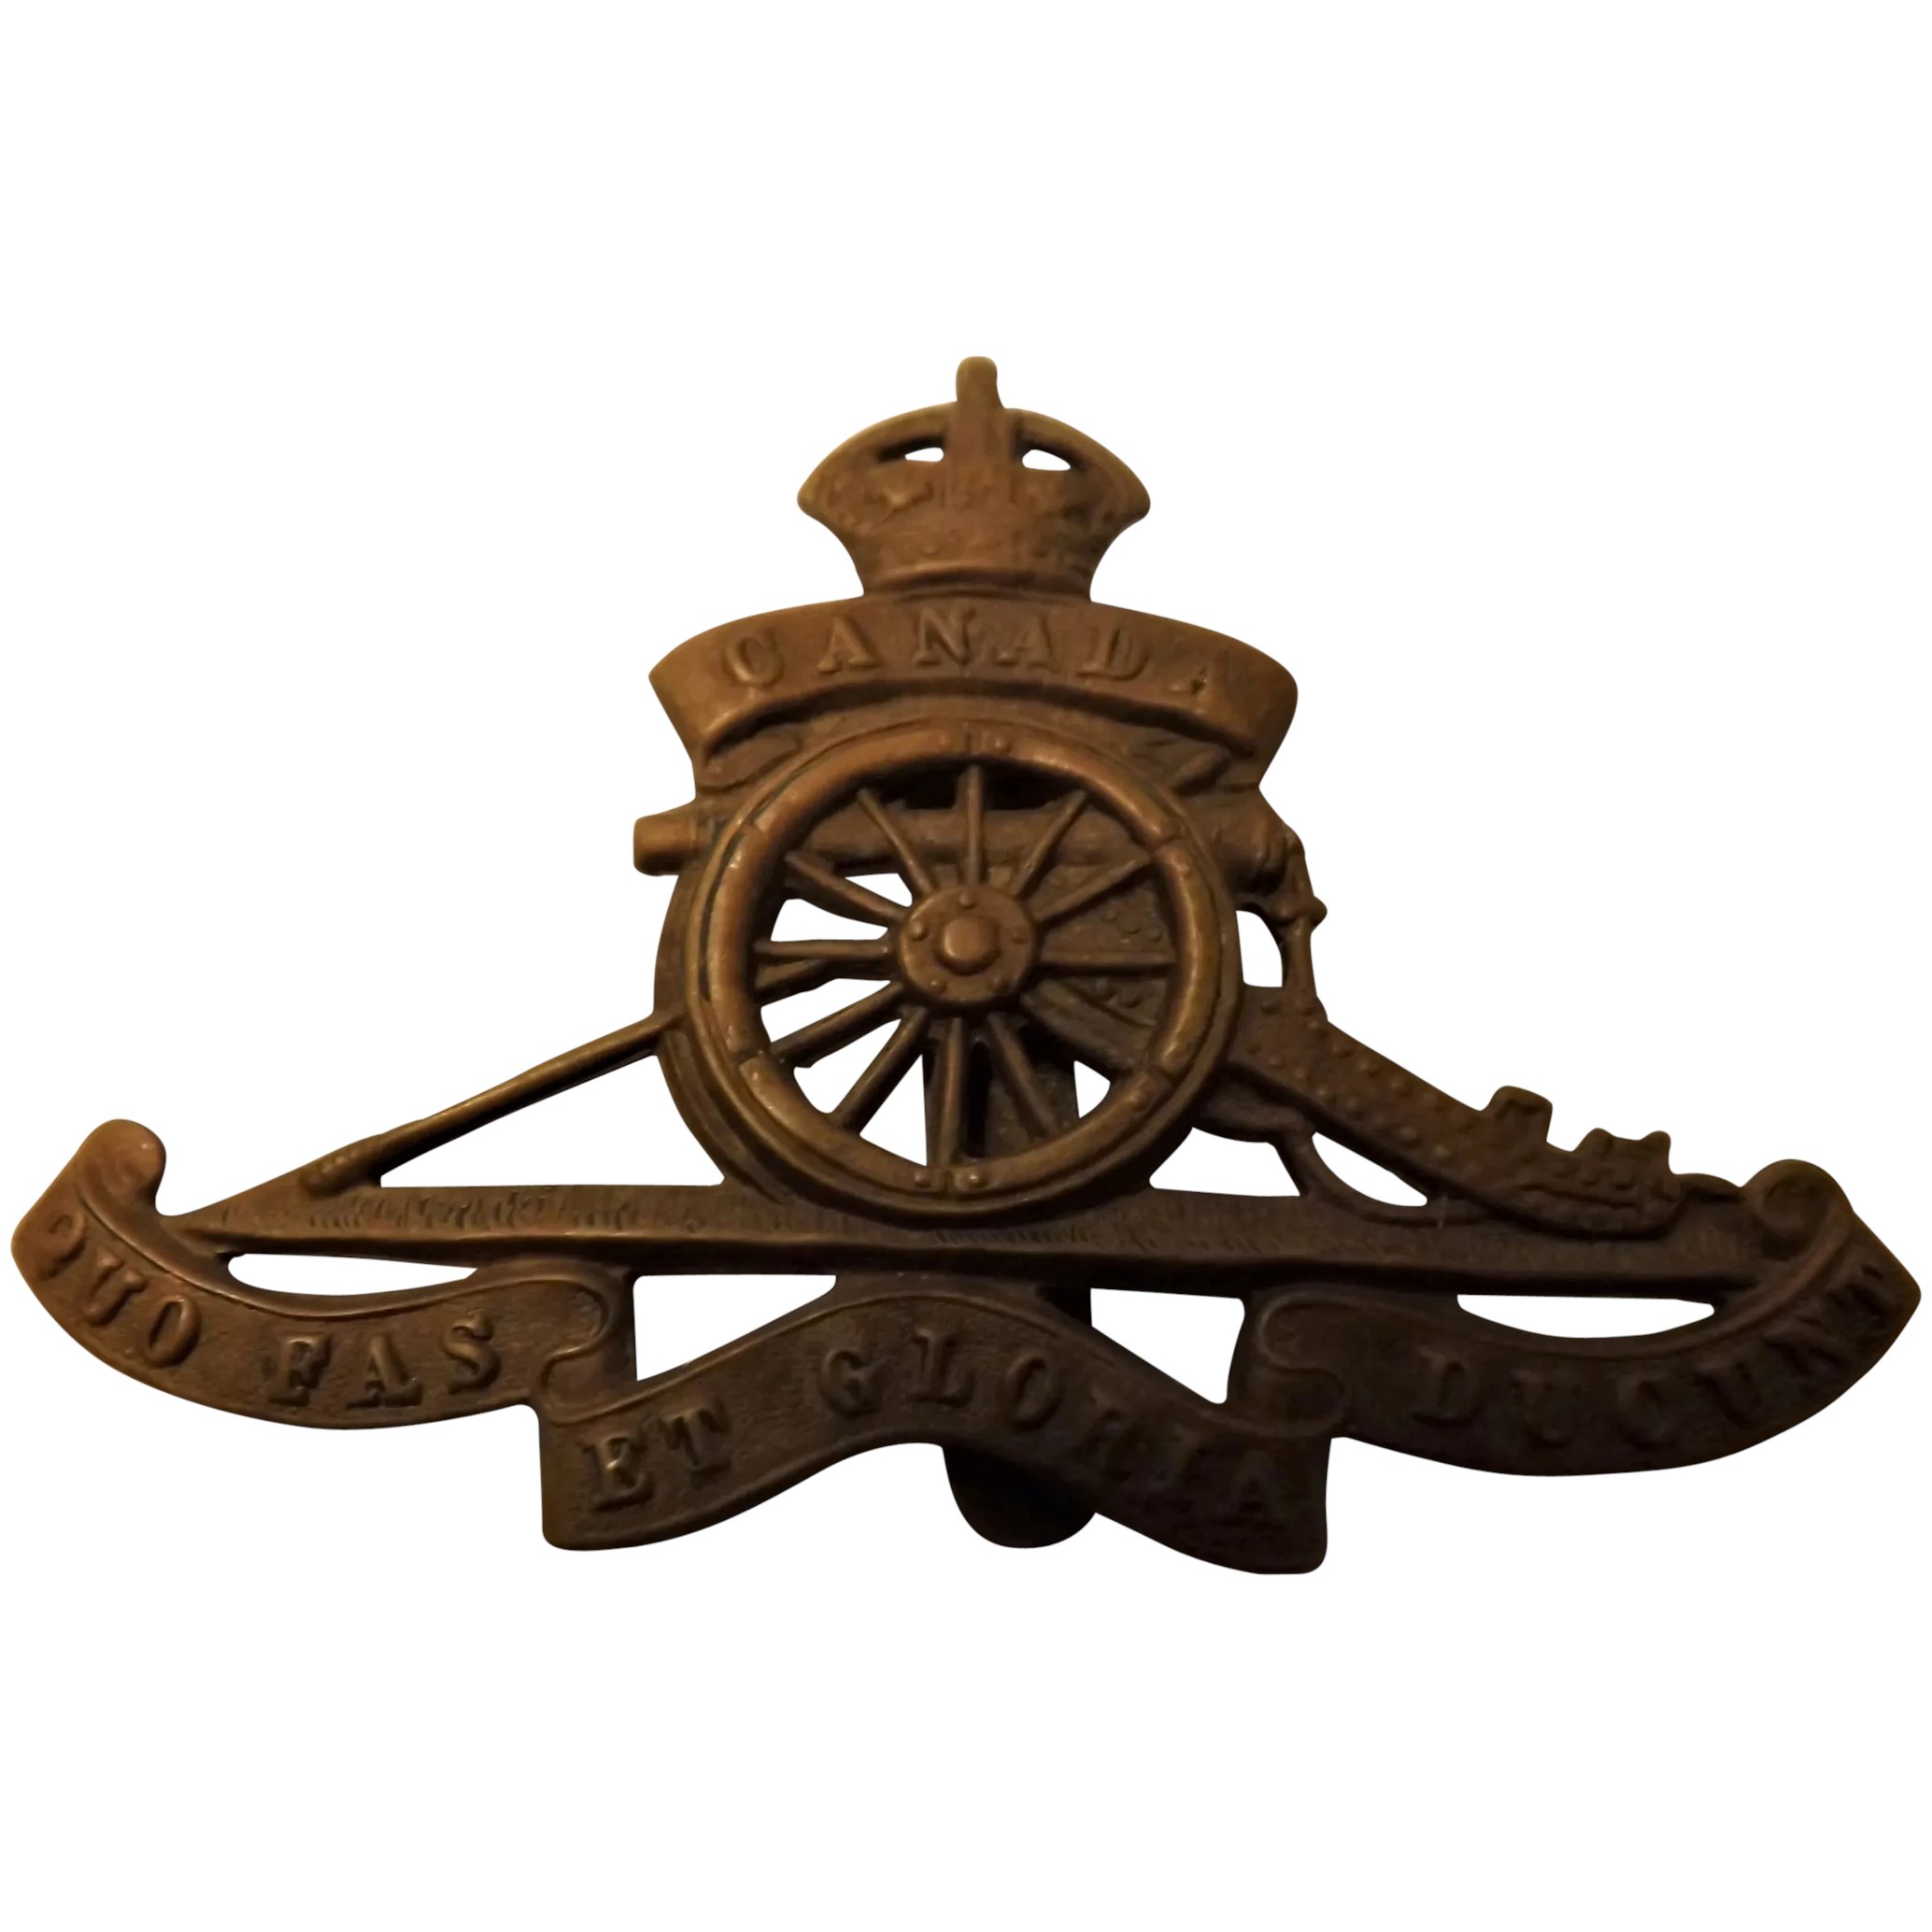 Canada World War One Army Badge - Artillery